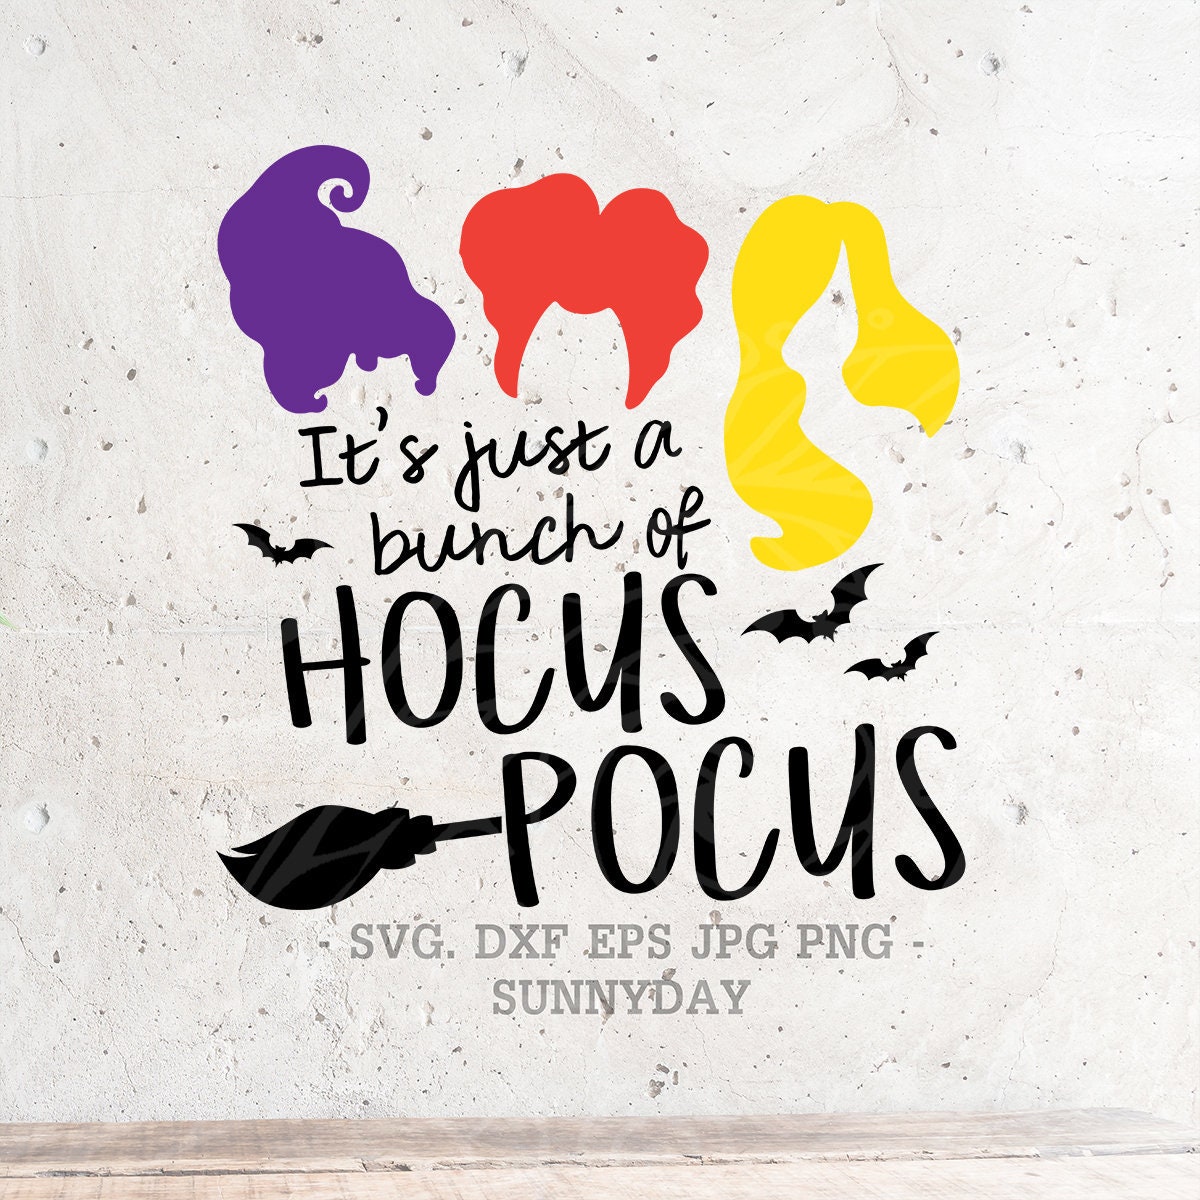 Snazzy Underholde flod Hocus Pocus Svgit's Just A Bunch of Hocus Pocus SVG File - Etsy